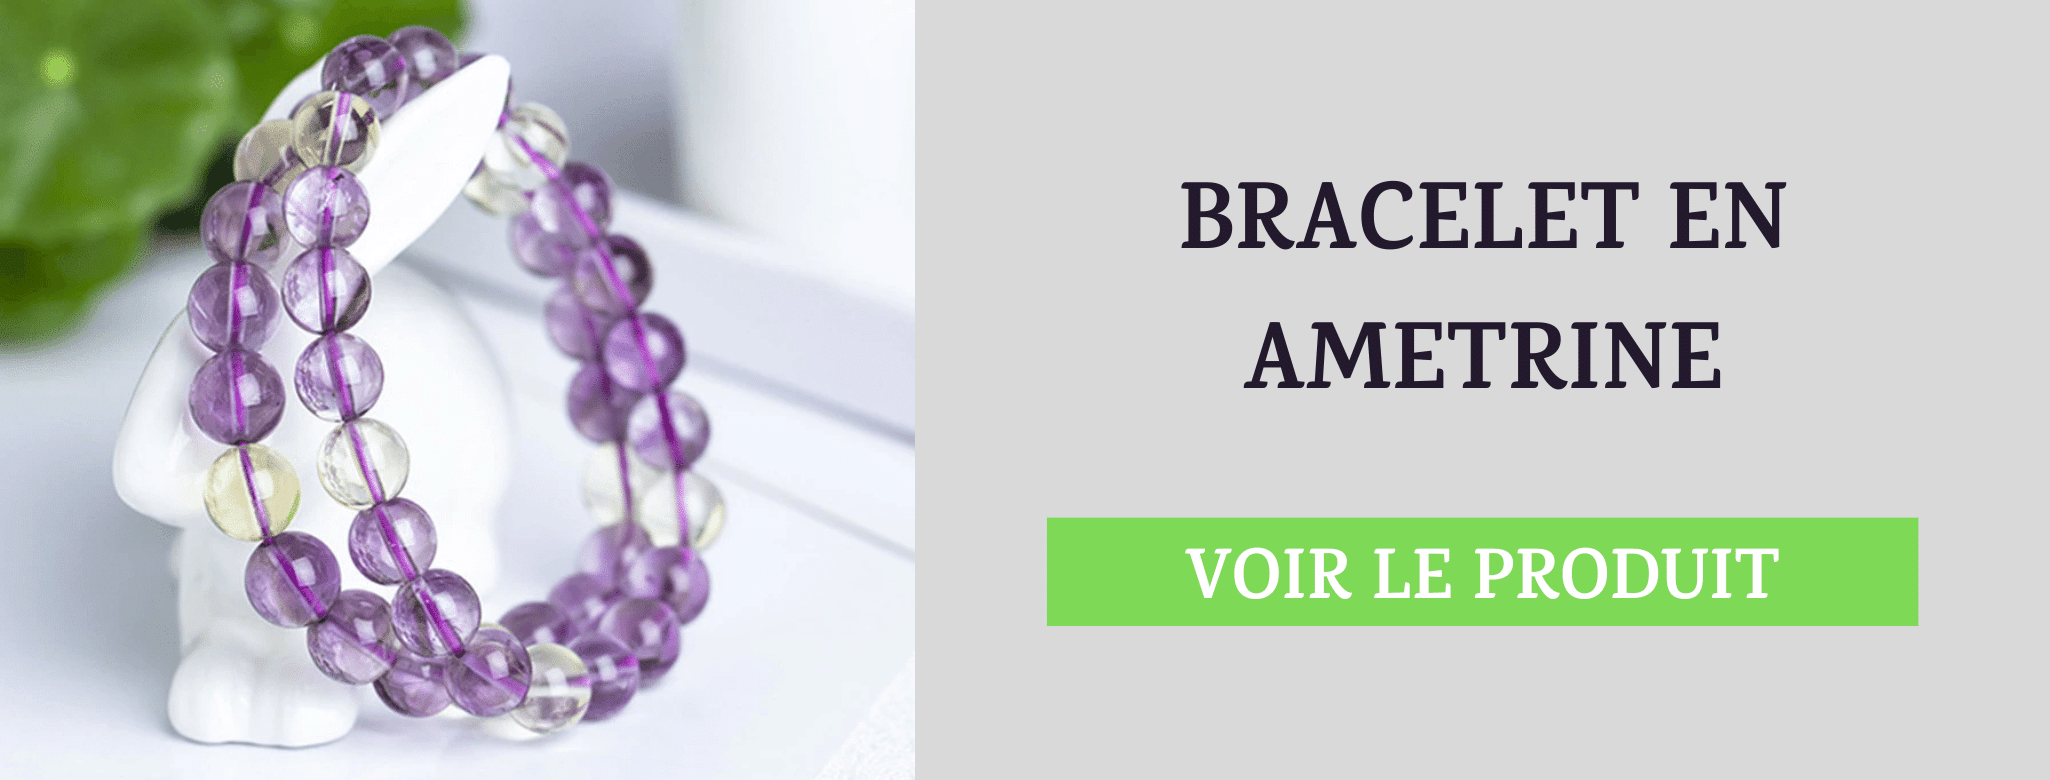 Bracelet Amétrine